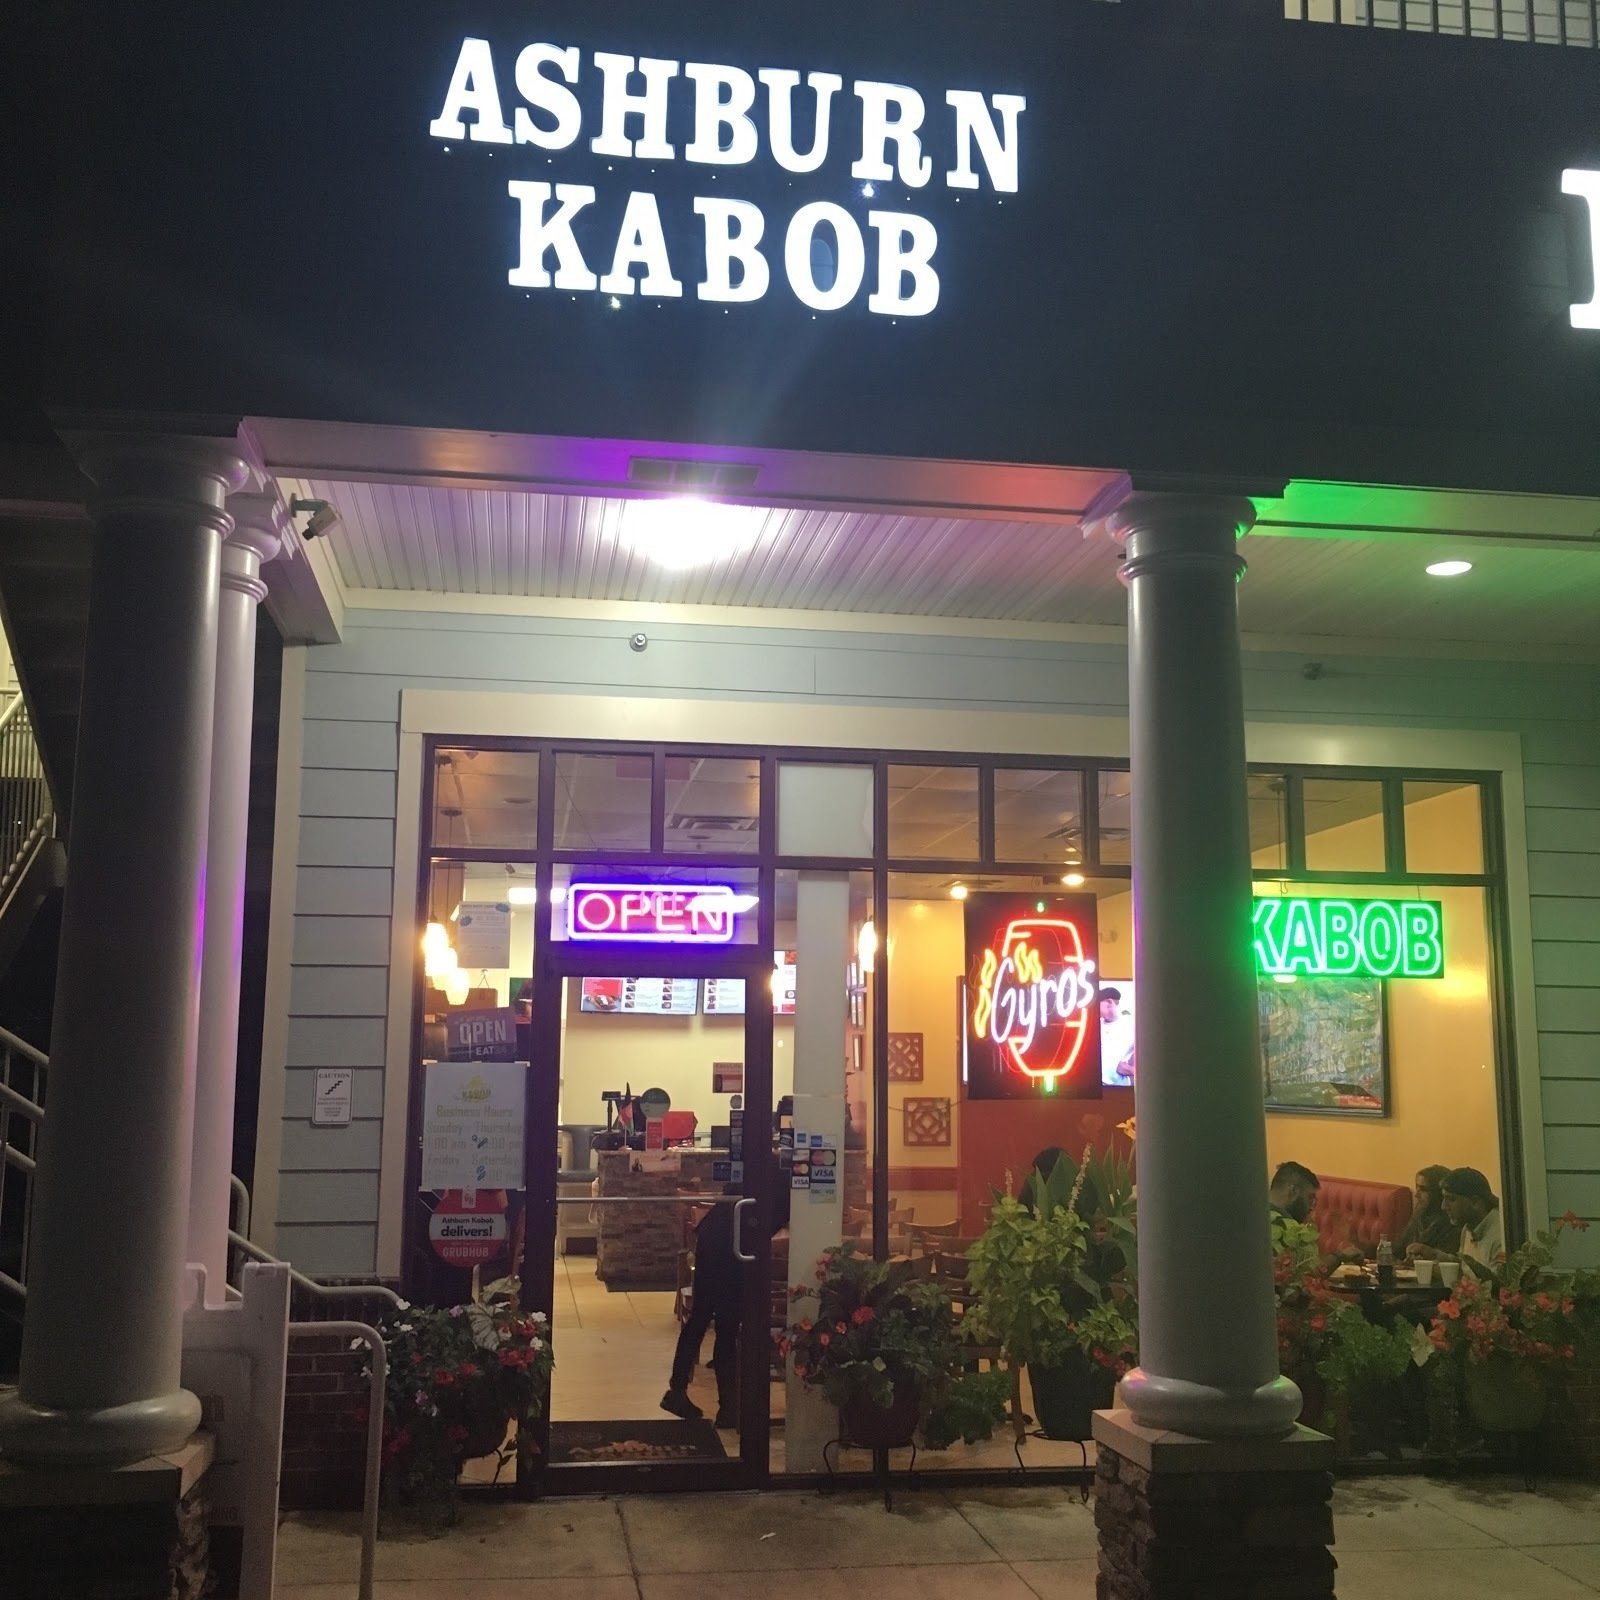 Ashburn Kabob: A Work-Friendly Place in Ashburn